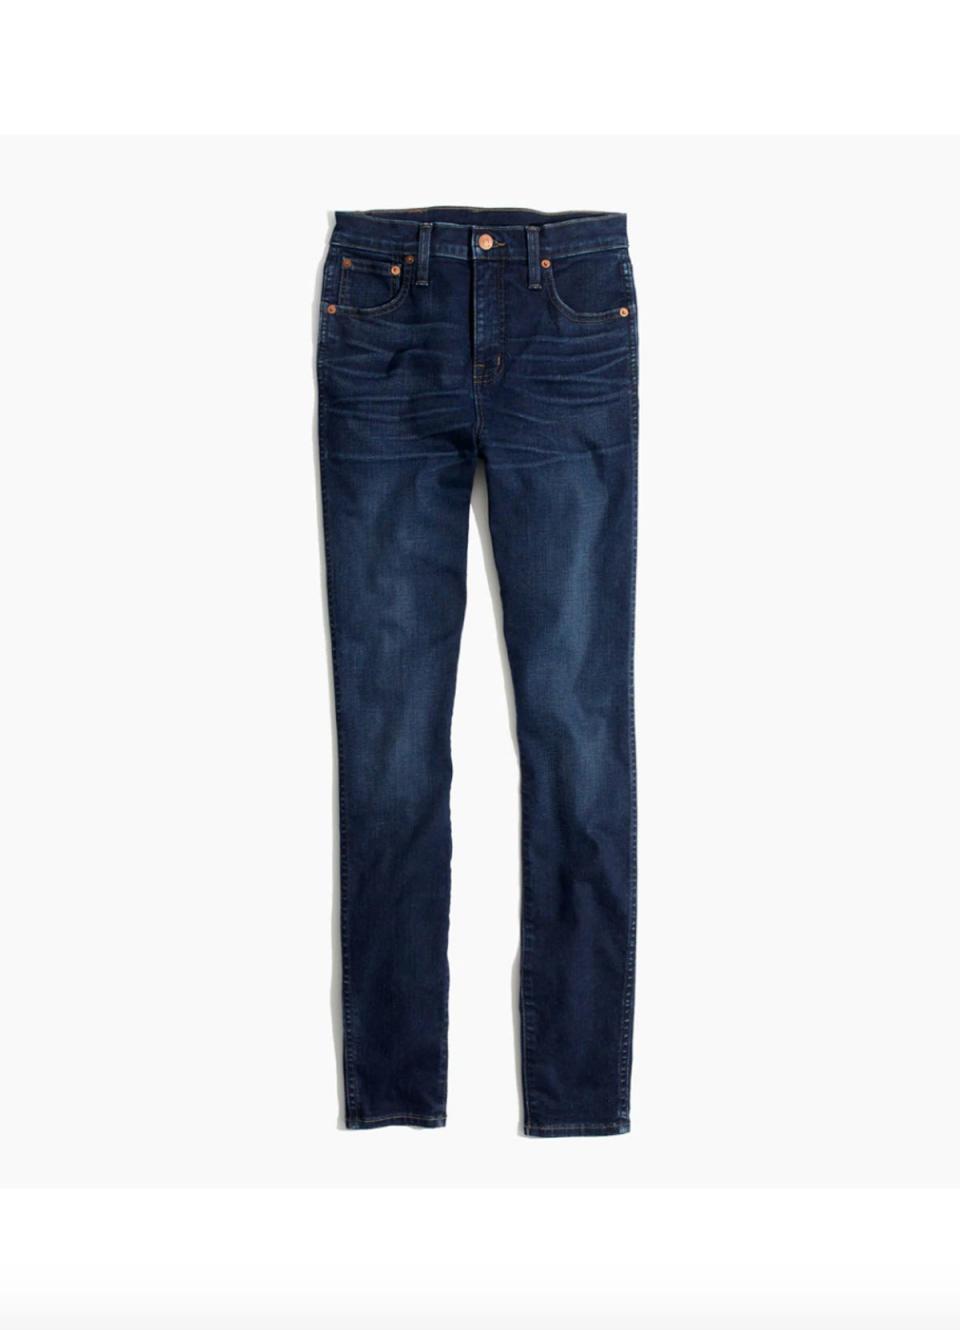 Madewell Curvy High-Rise Skinny Jeans